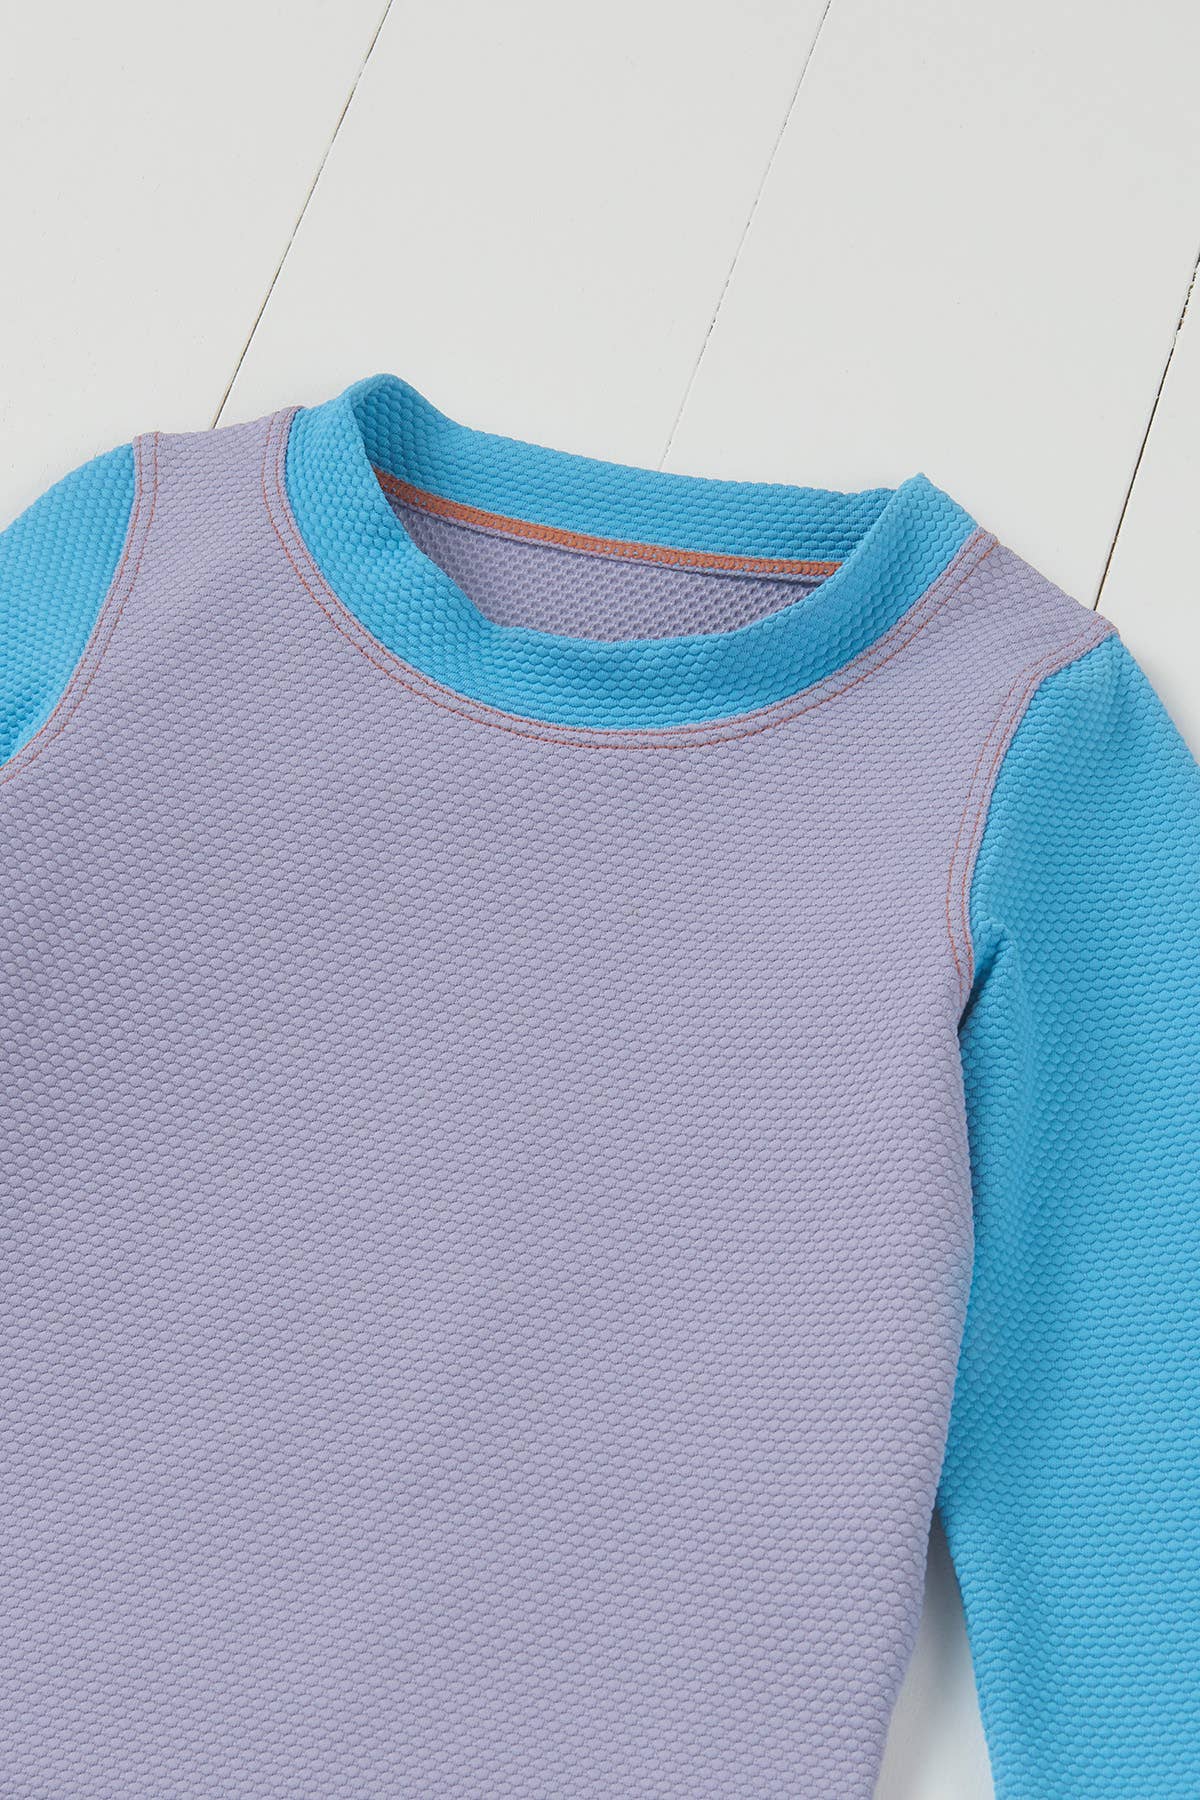 Grass & Air - Lavender Kids Long Sleeve Rash Vest